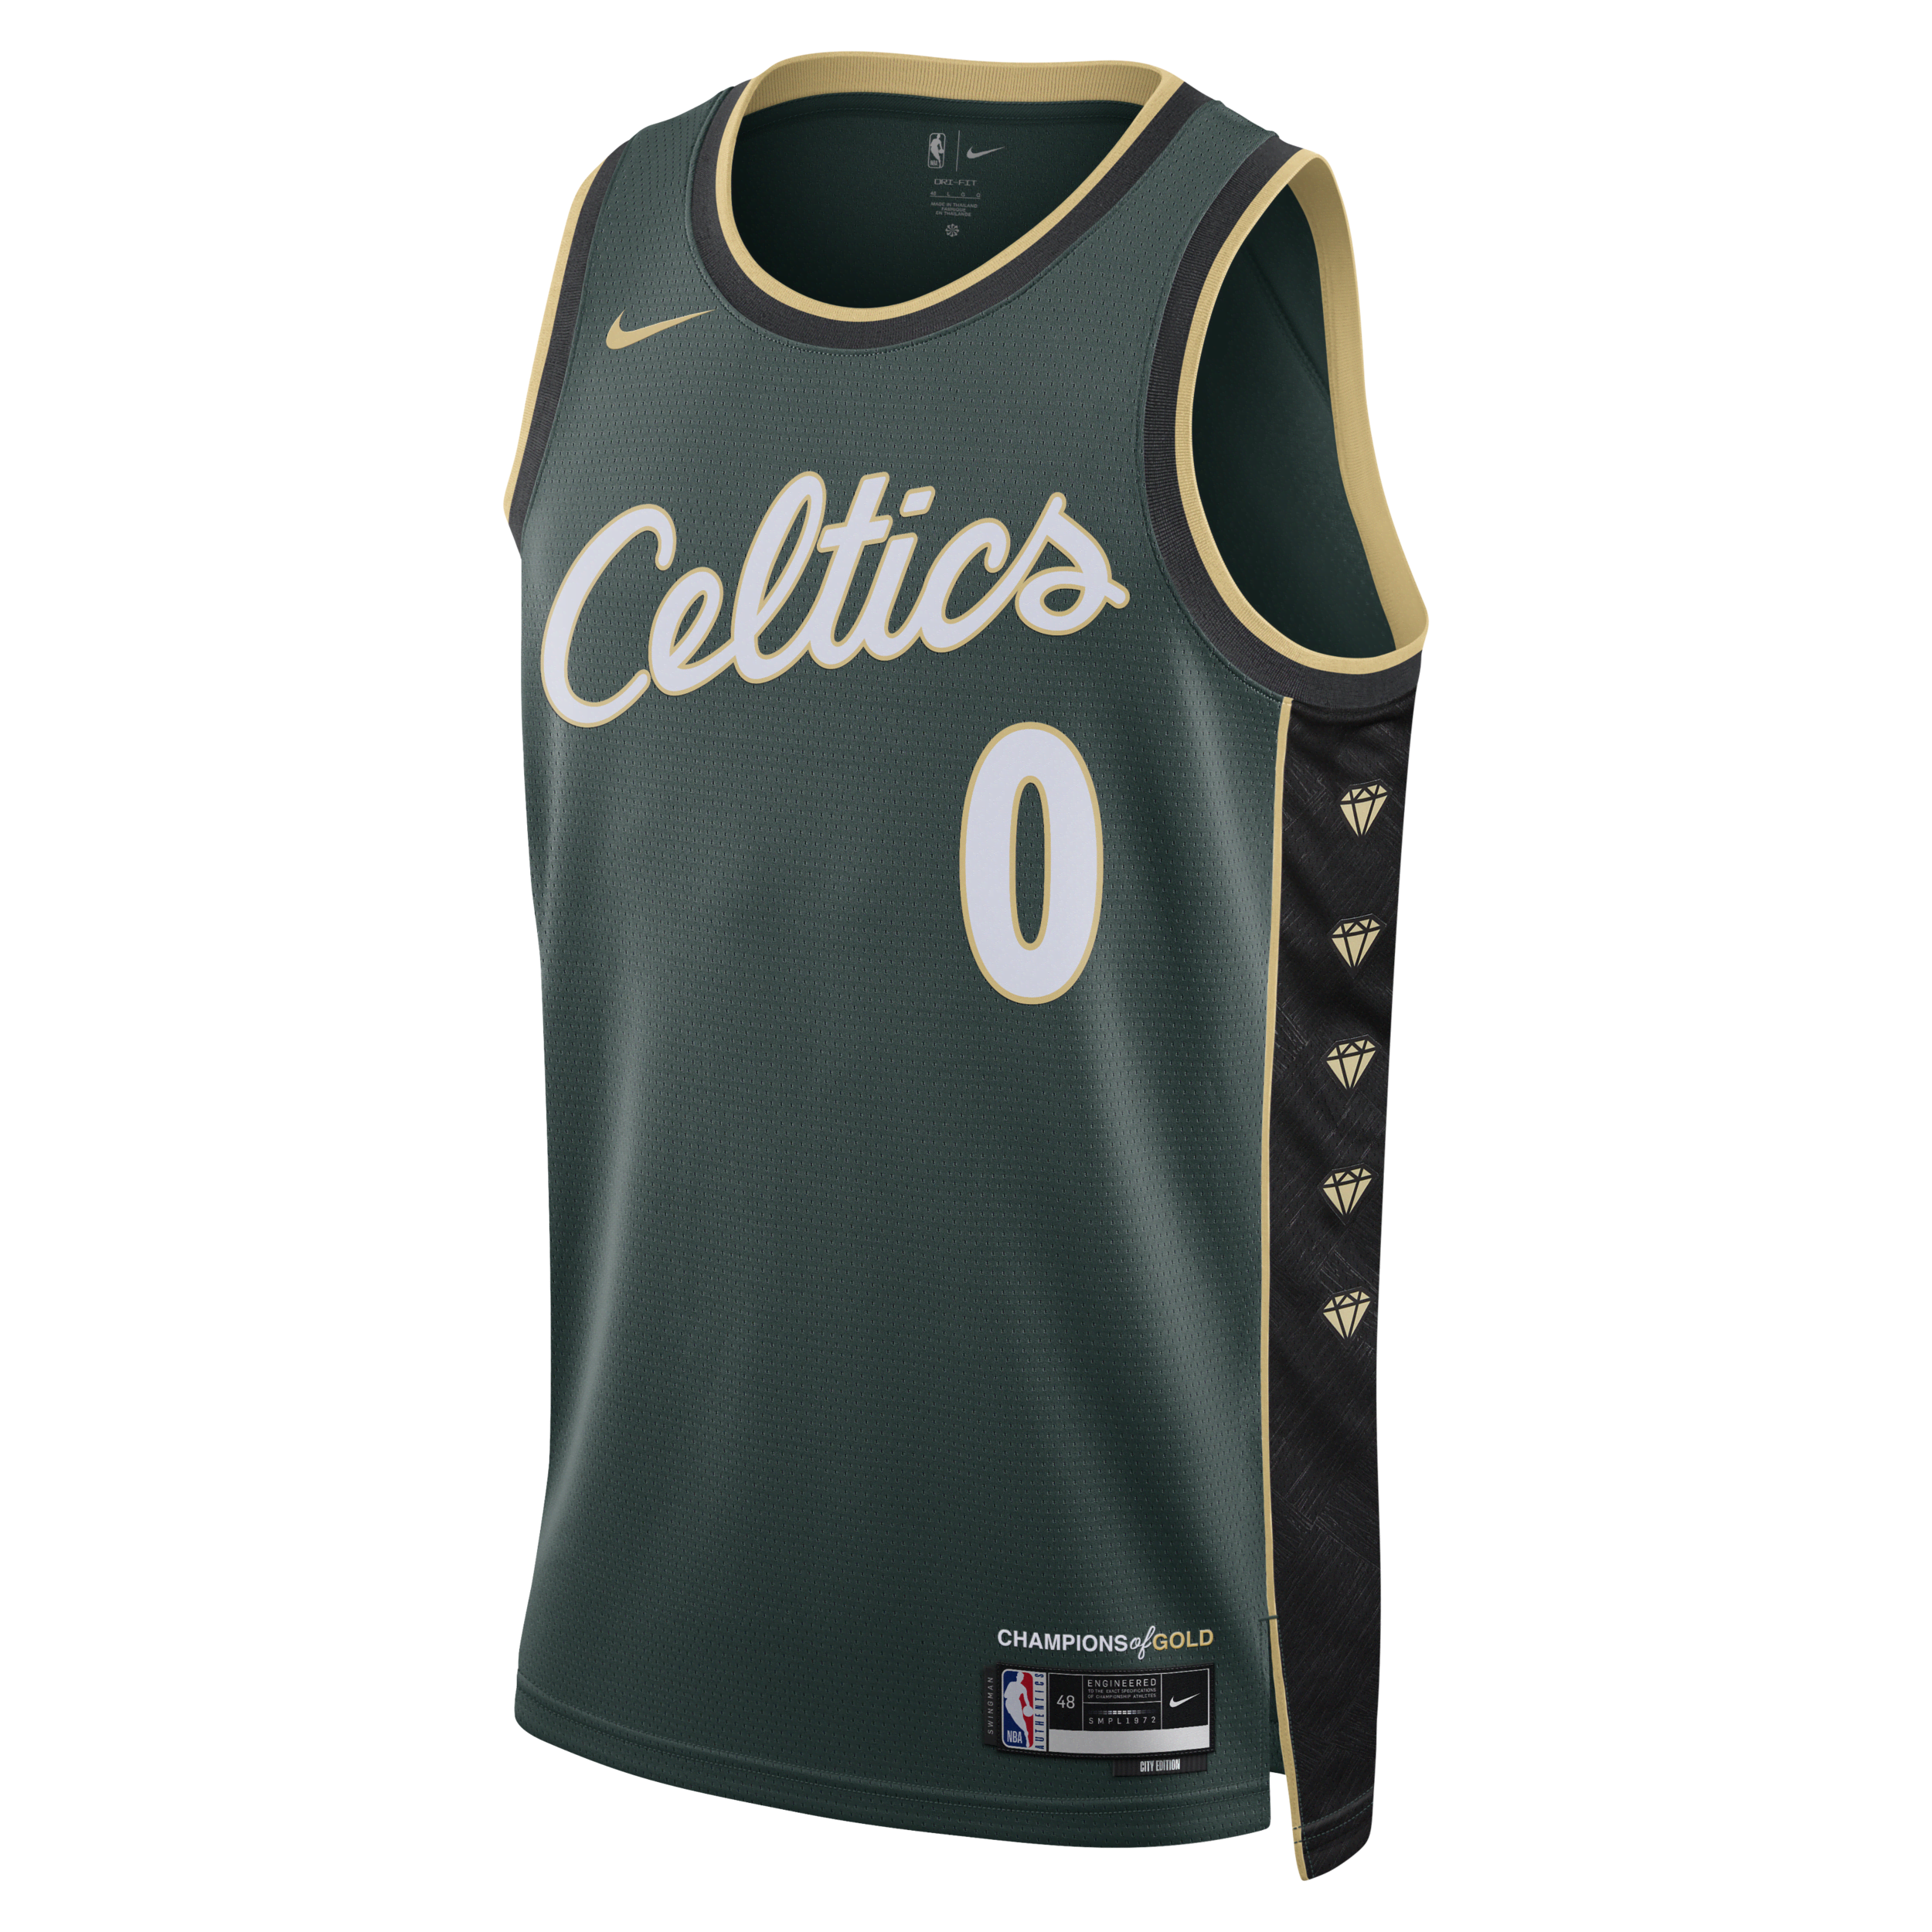 Celtics reveal new city edition uniforms